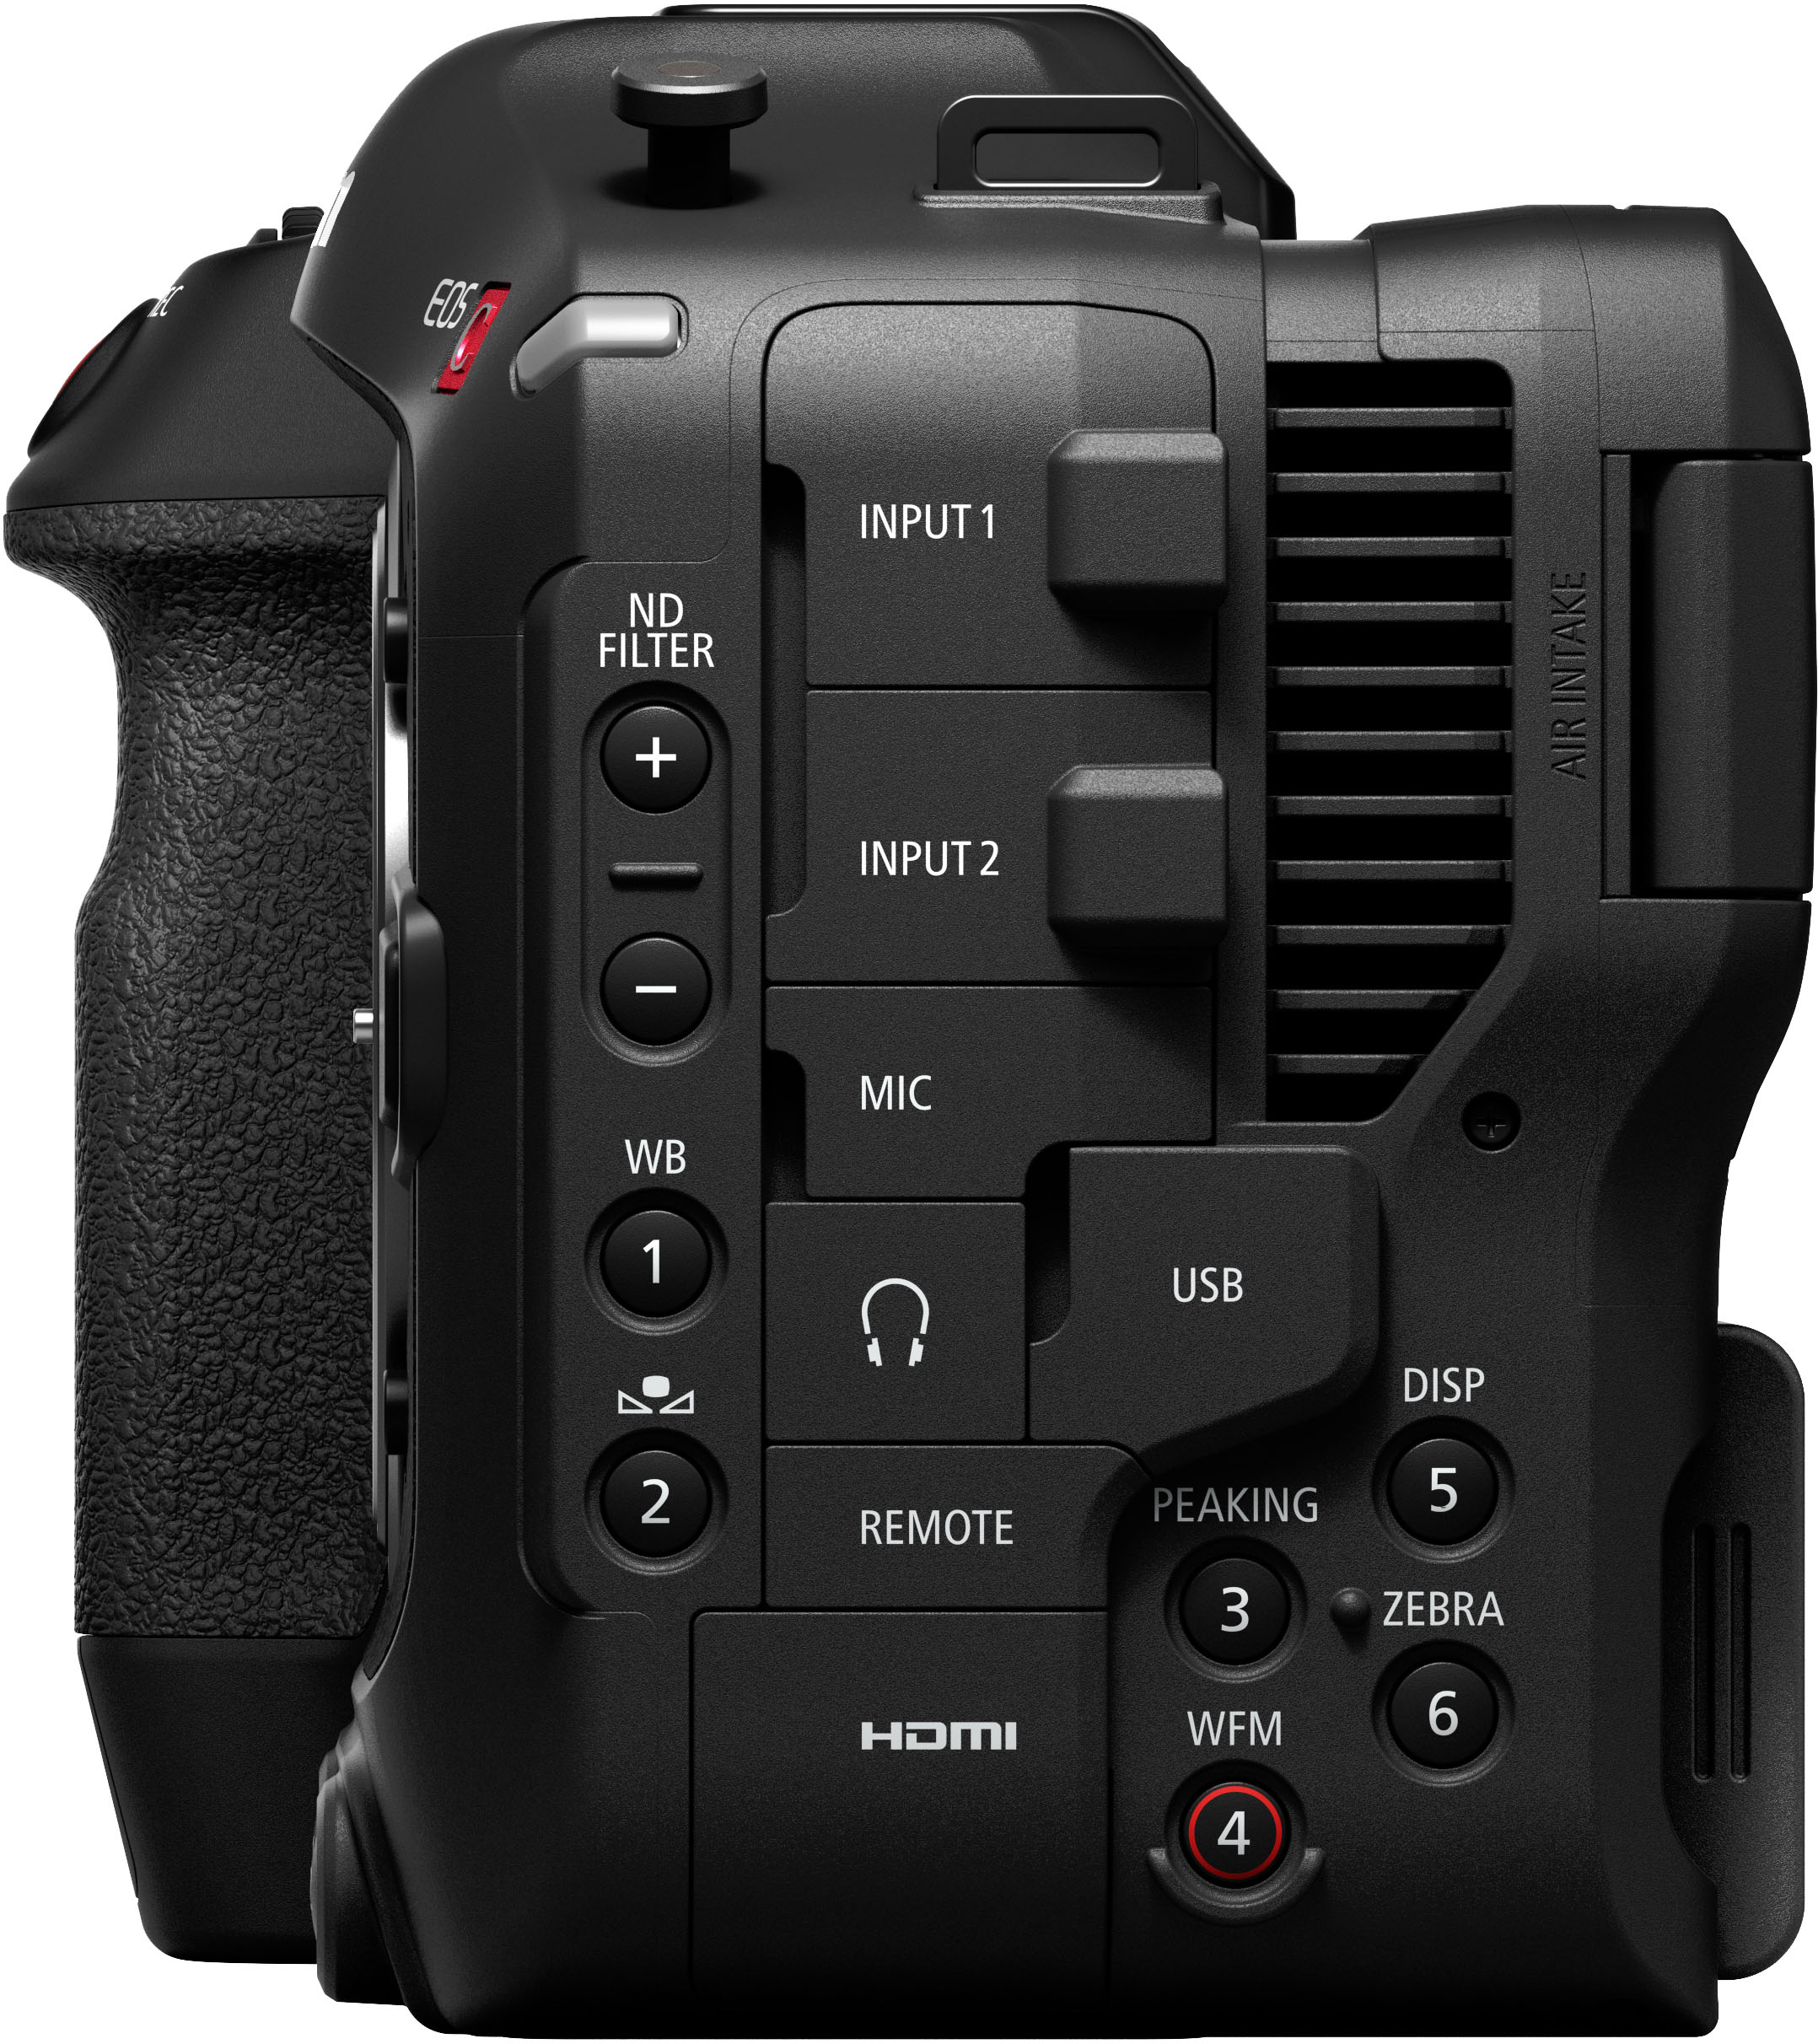 Canon EOS R5 C 8K Video Mirrorless Cinema Camera (Body Only) Black 5077C002  - Best Buy